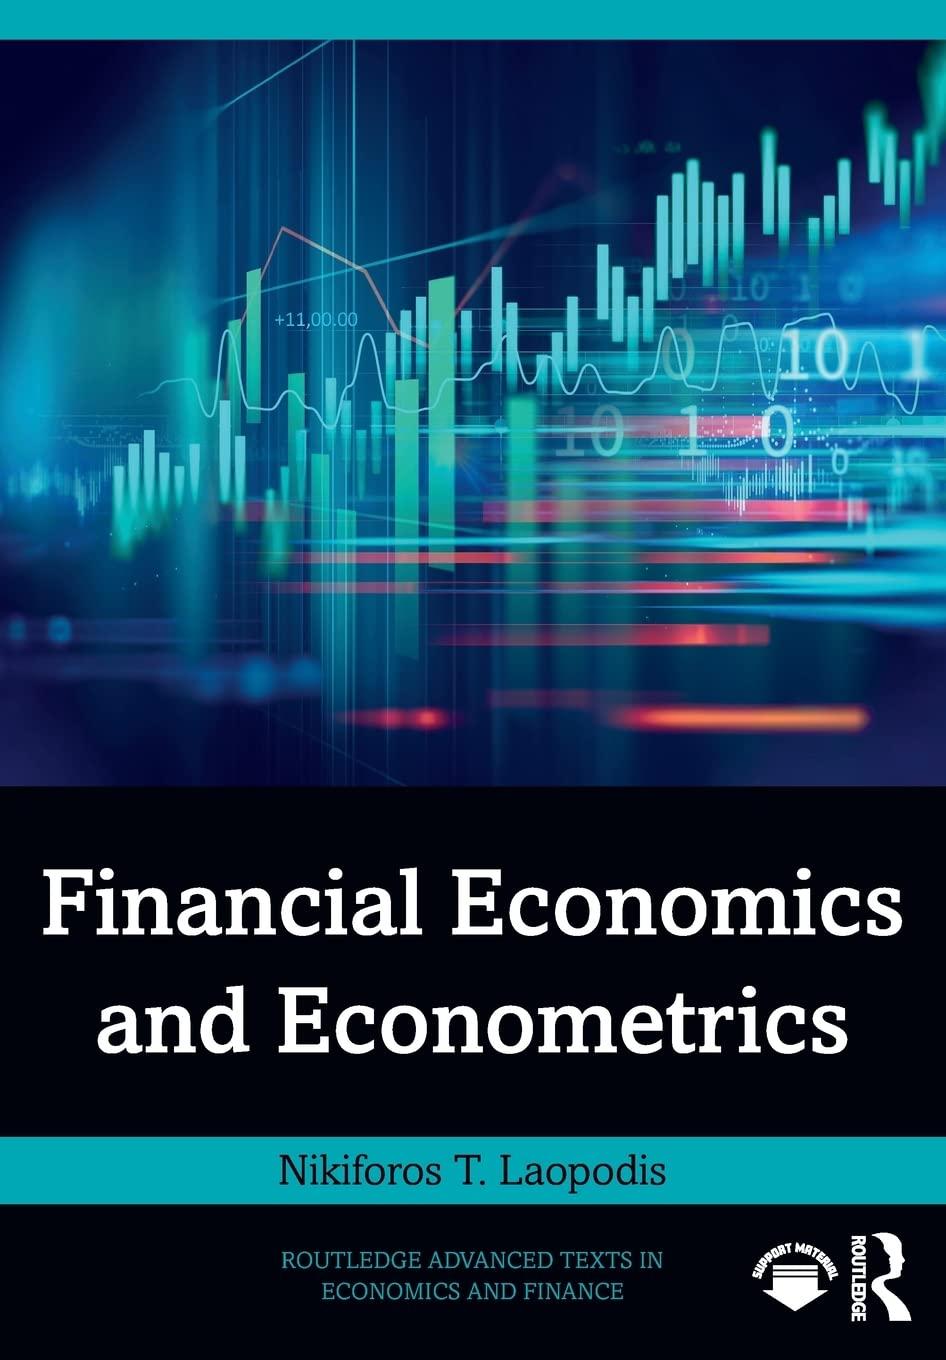 financial economics and econometrics 1st edition nikiforos t. laopodis 103207017x, 978-1032070179